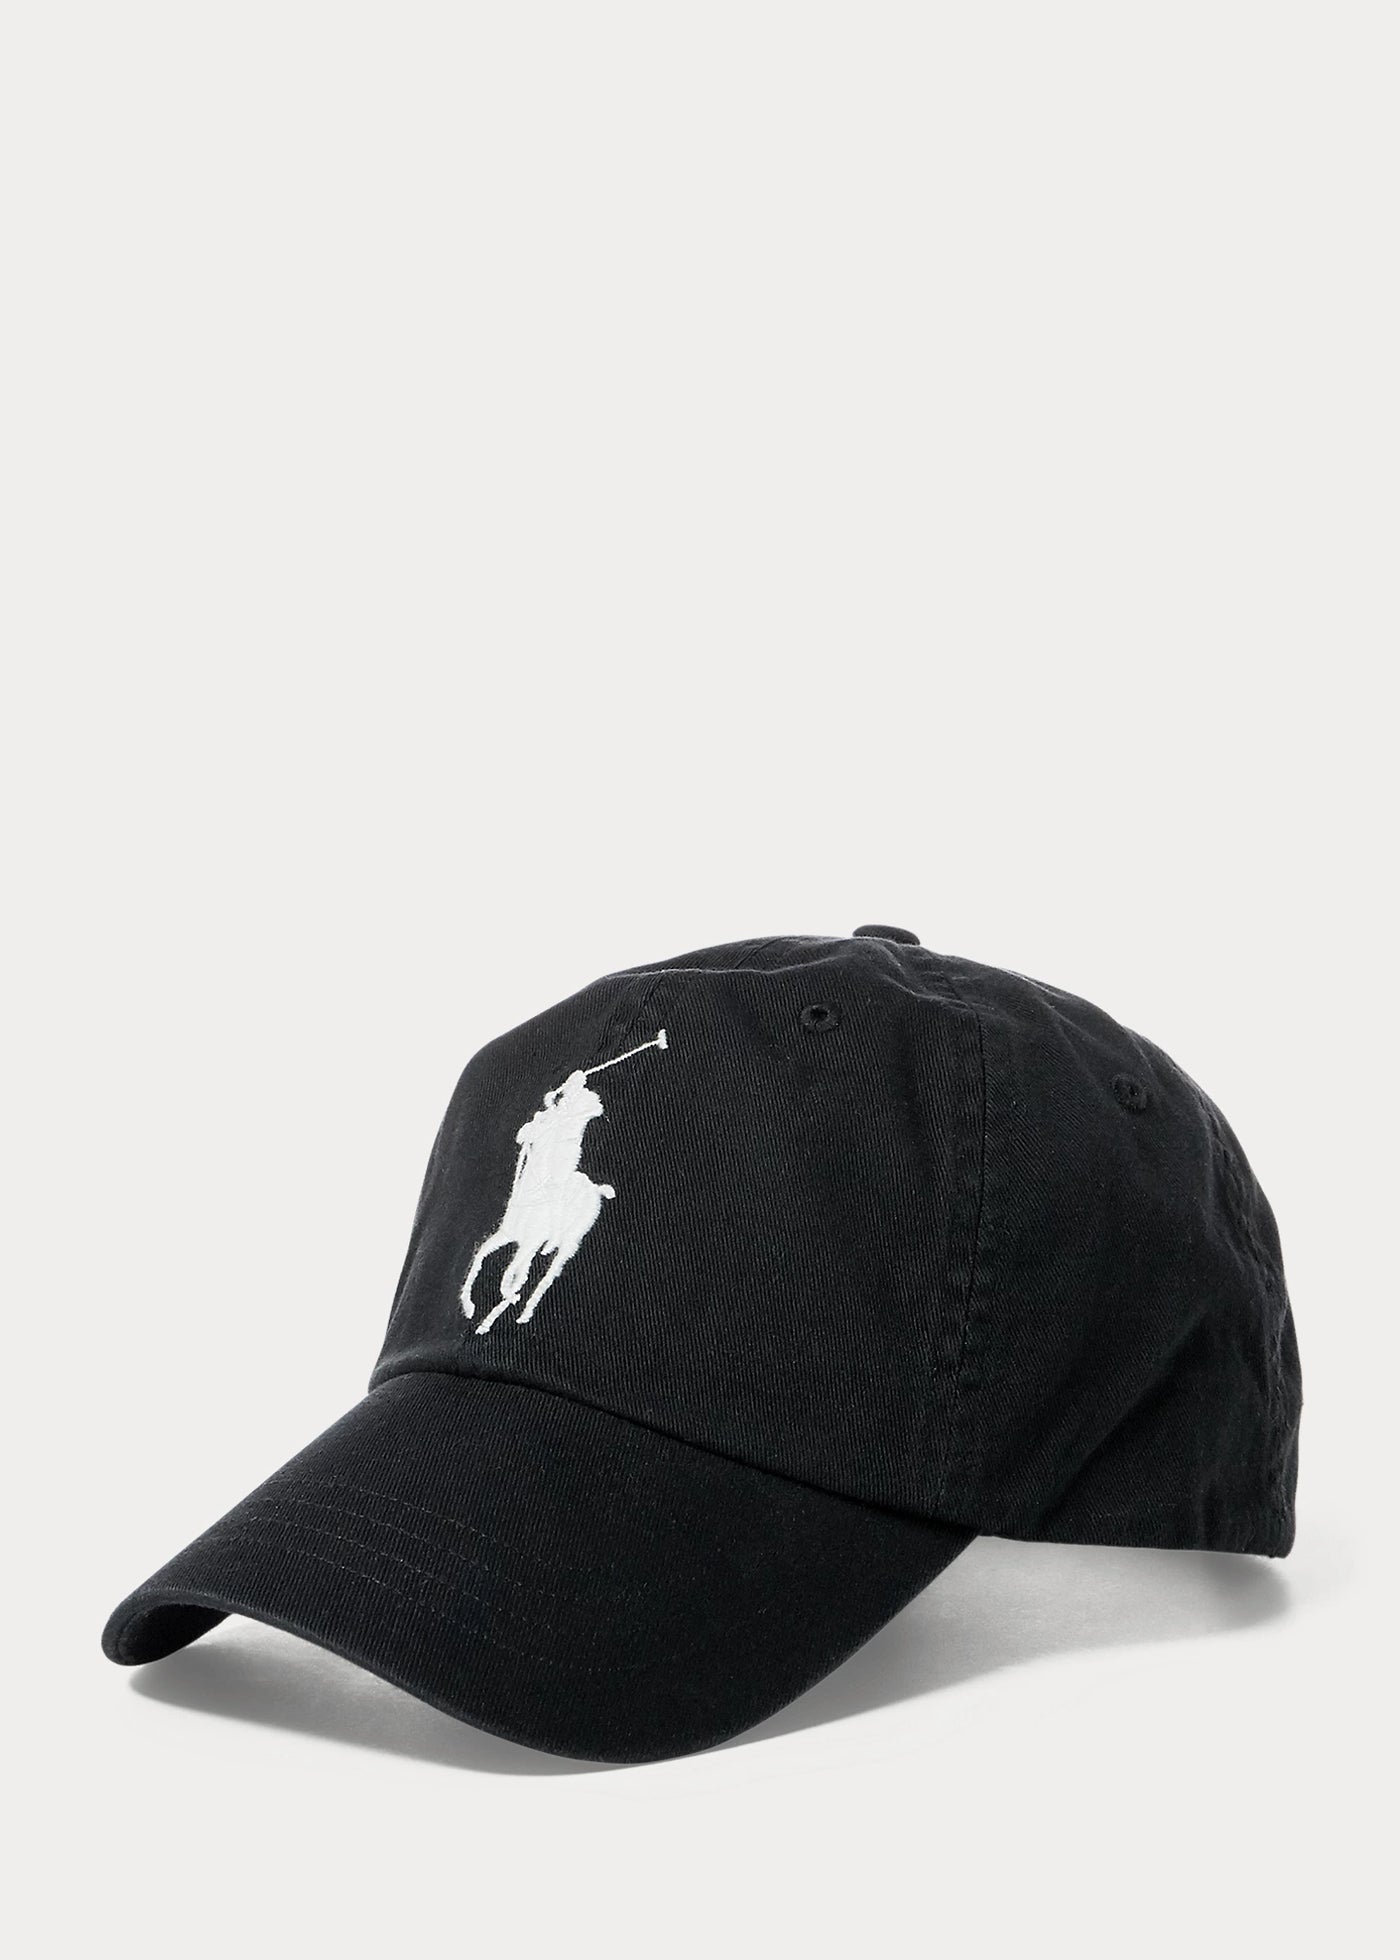 Ralph Lauren Hat with Embroidered Big Pony | Black